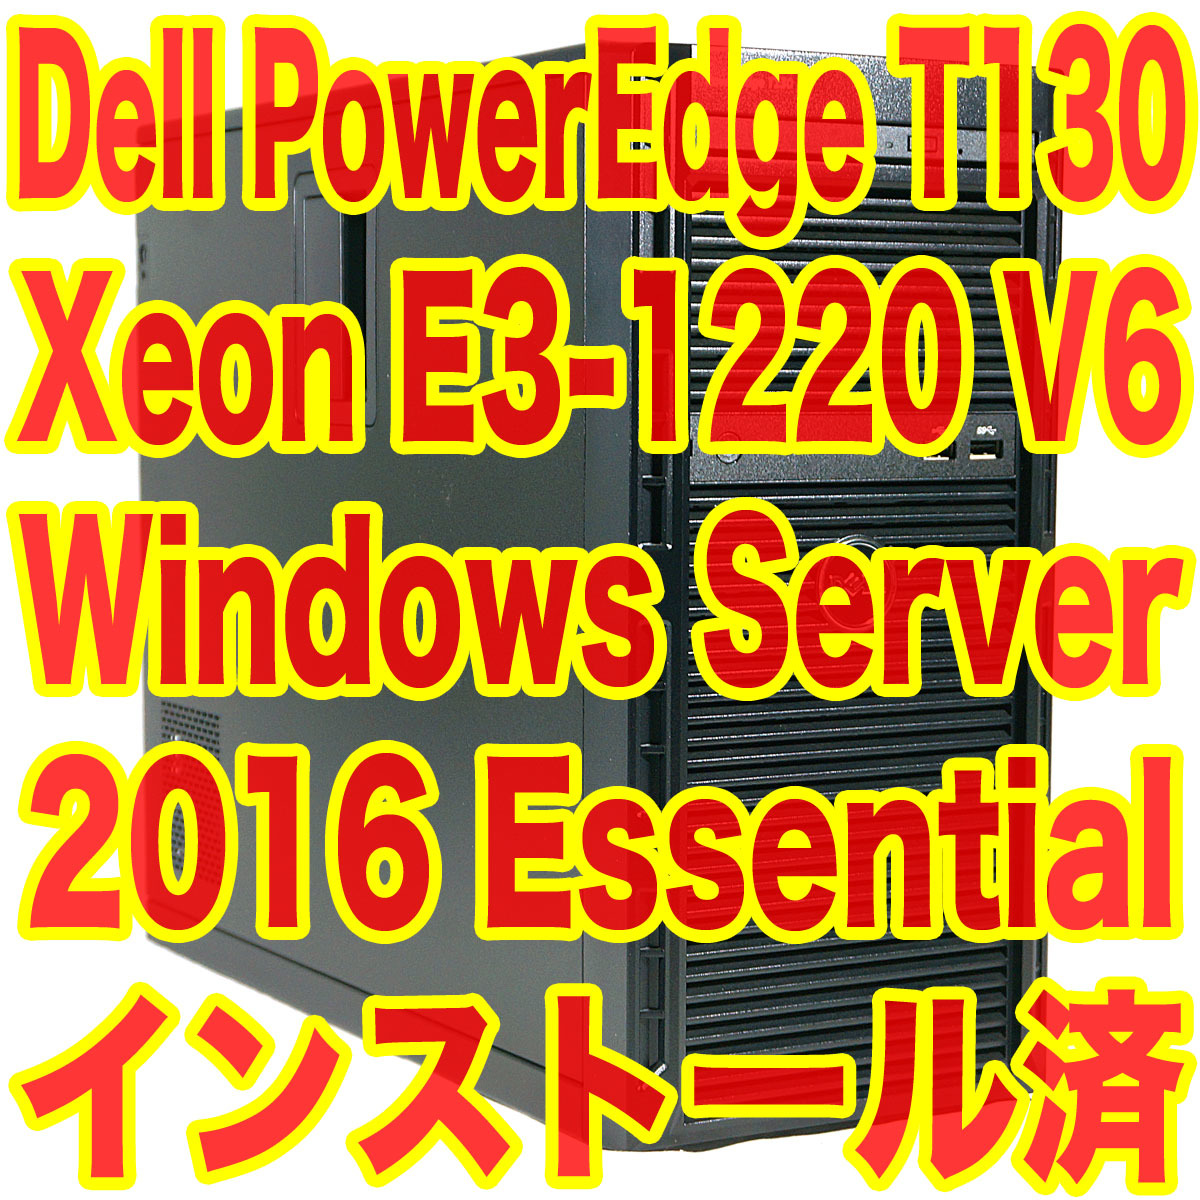 Dell PowerEdge T130 Xeon E3-1220 V6 8GB HDD 500GB Windows Server 2016 Essentials インストール済 高性能NAS構築に タワー型サーバー